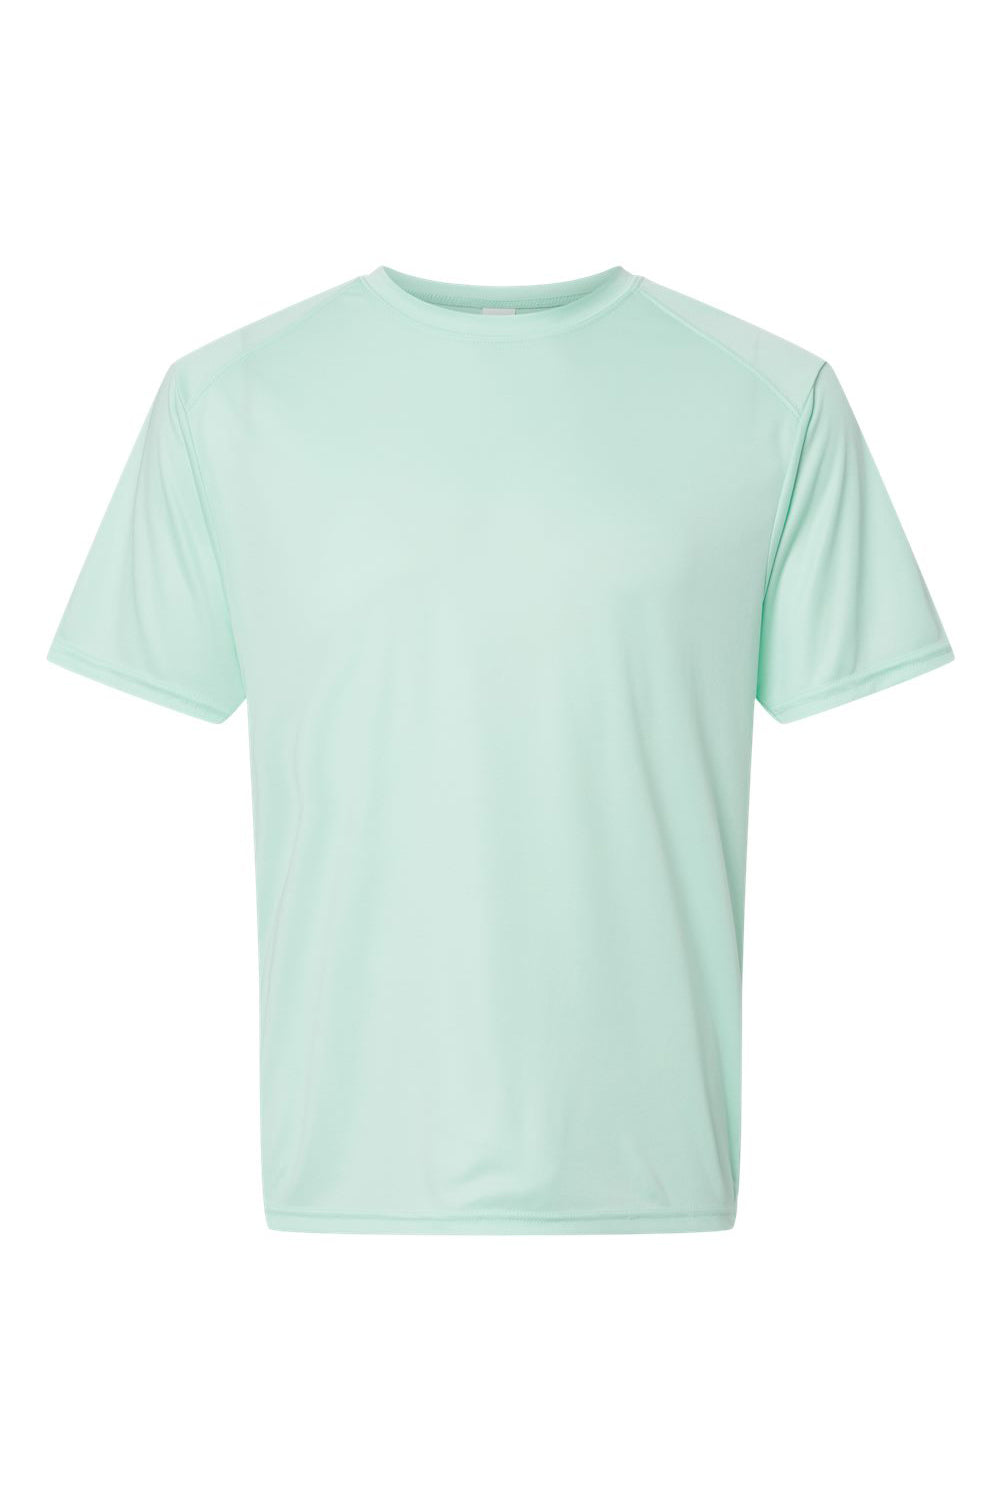 Paragon 200 Mens Islander Performance Short Sleeve Crewneck T-Shirt Mint Green Flat Front